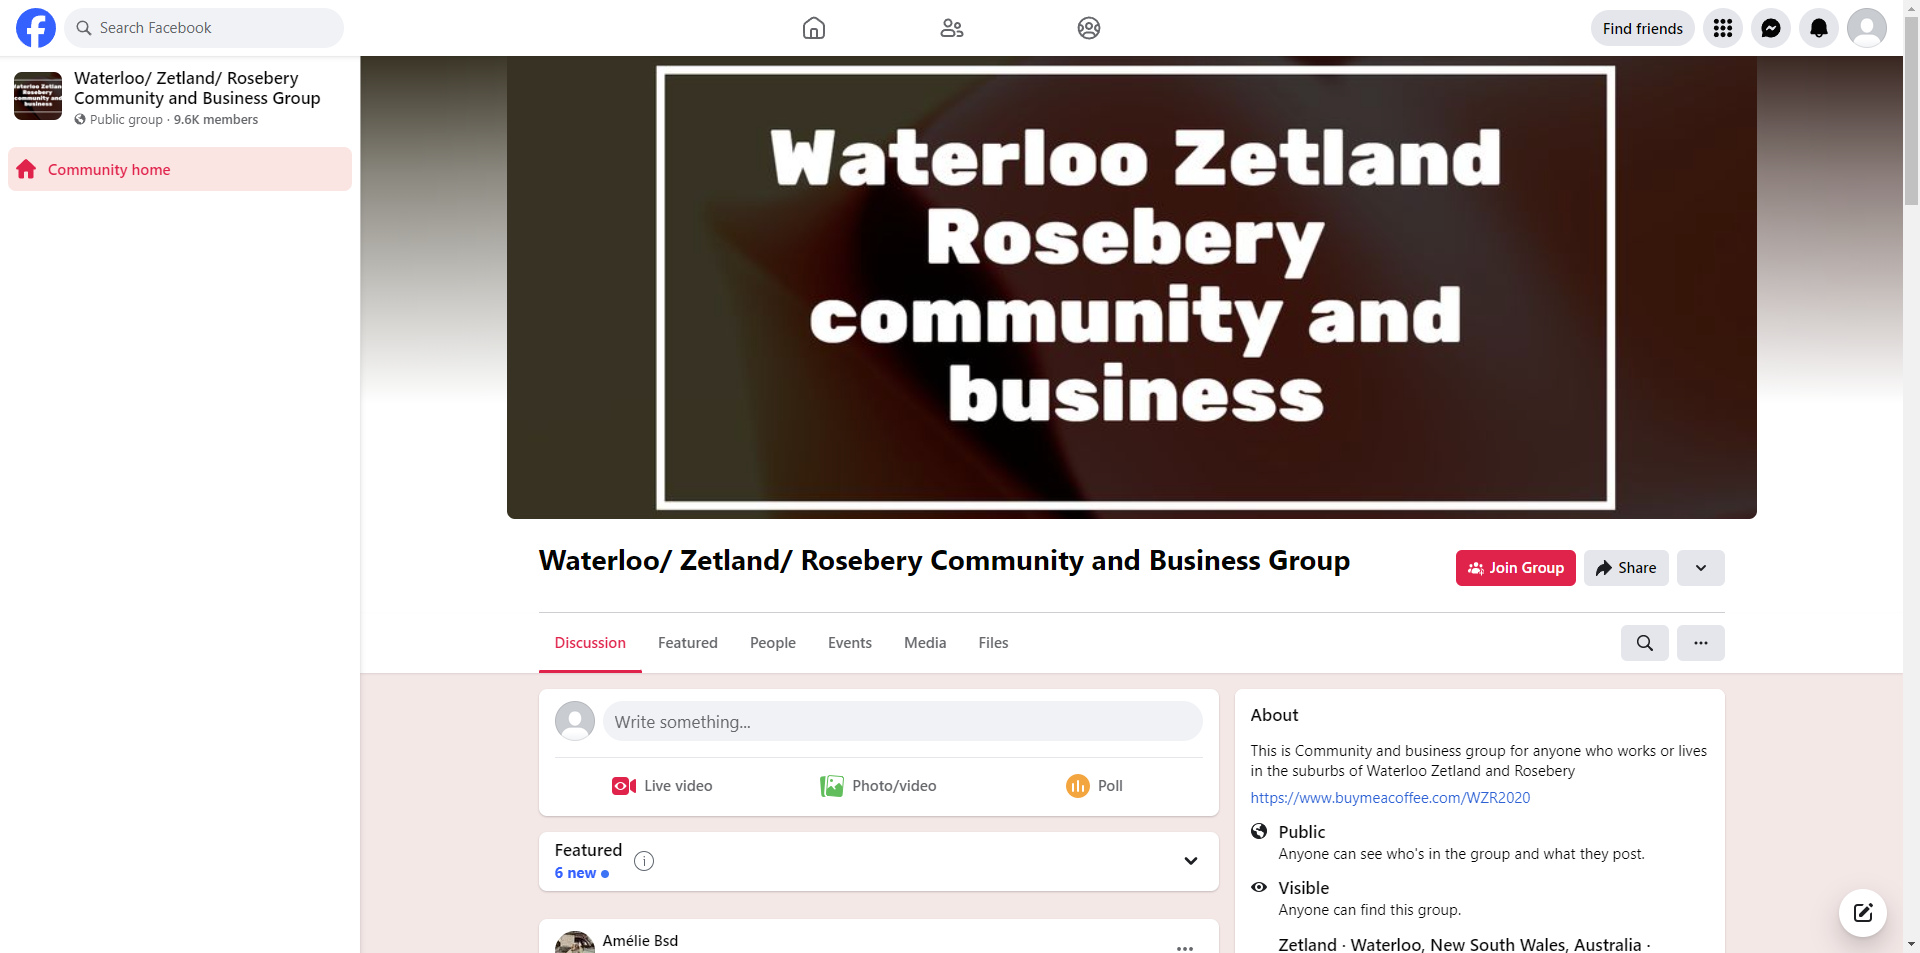 Zetland/Rosebery Community and Business Group